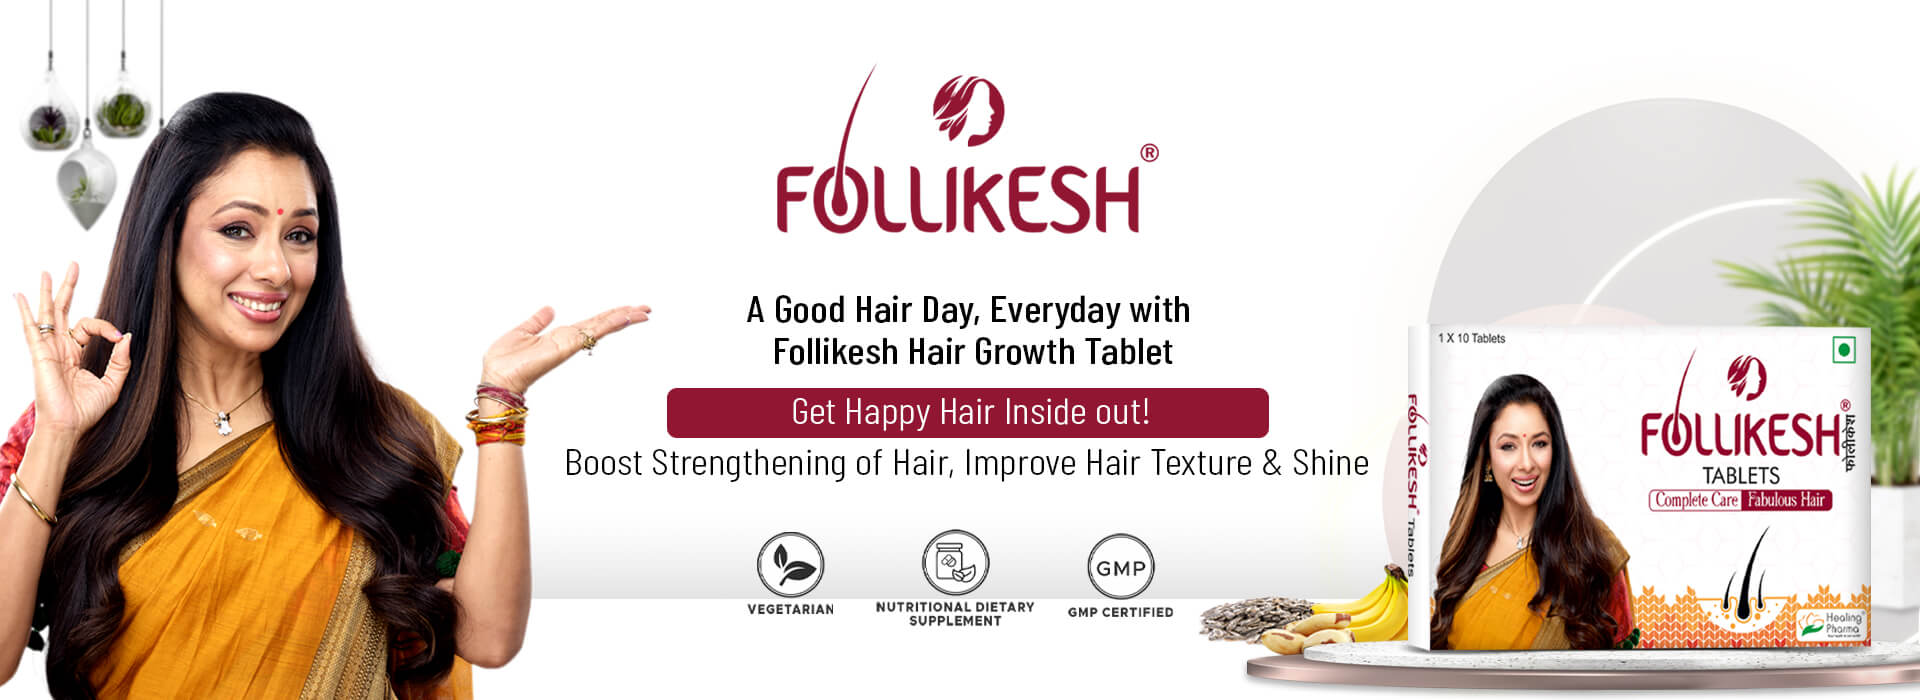 Follikesh Hair Growth Supplement Tablets